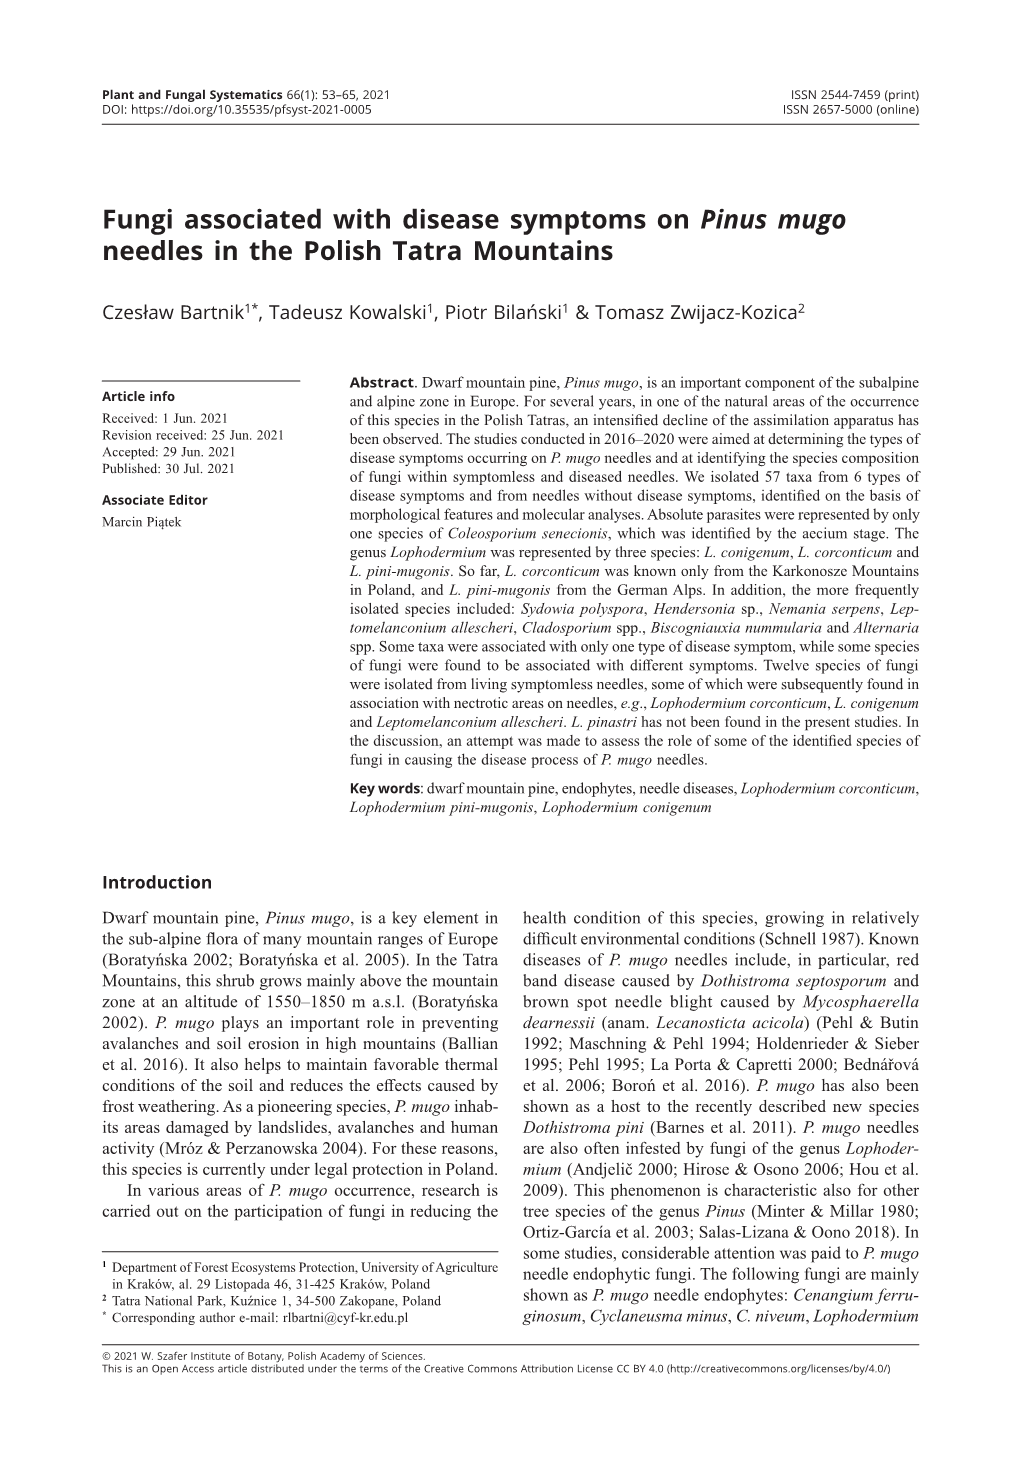 Fungi Associated with Disease Symptoms on Pinus Mugo Needles in the Polish Tatra Mountains